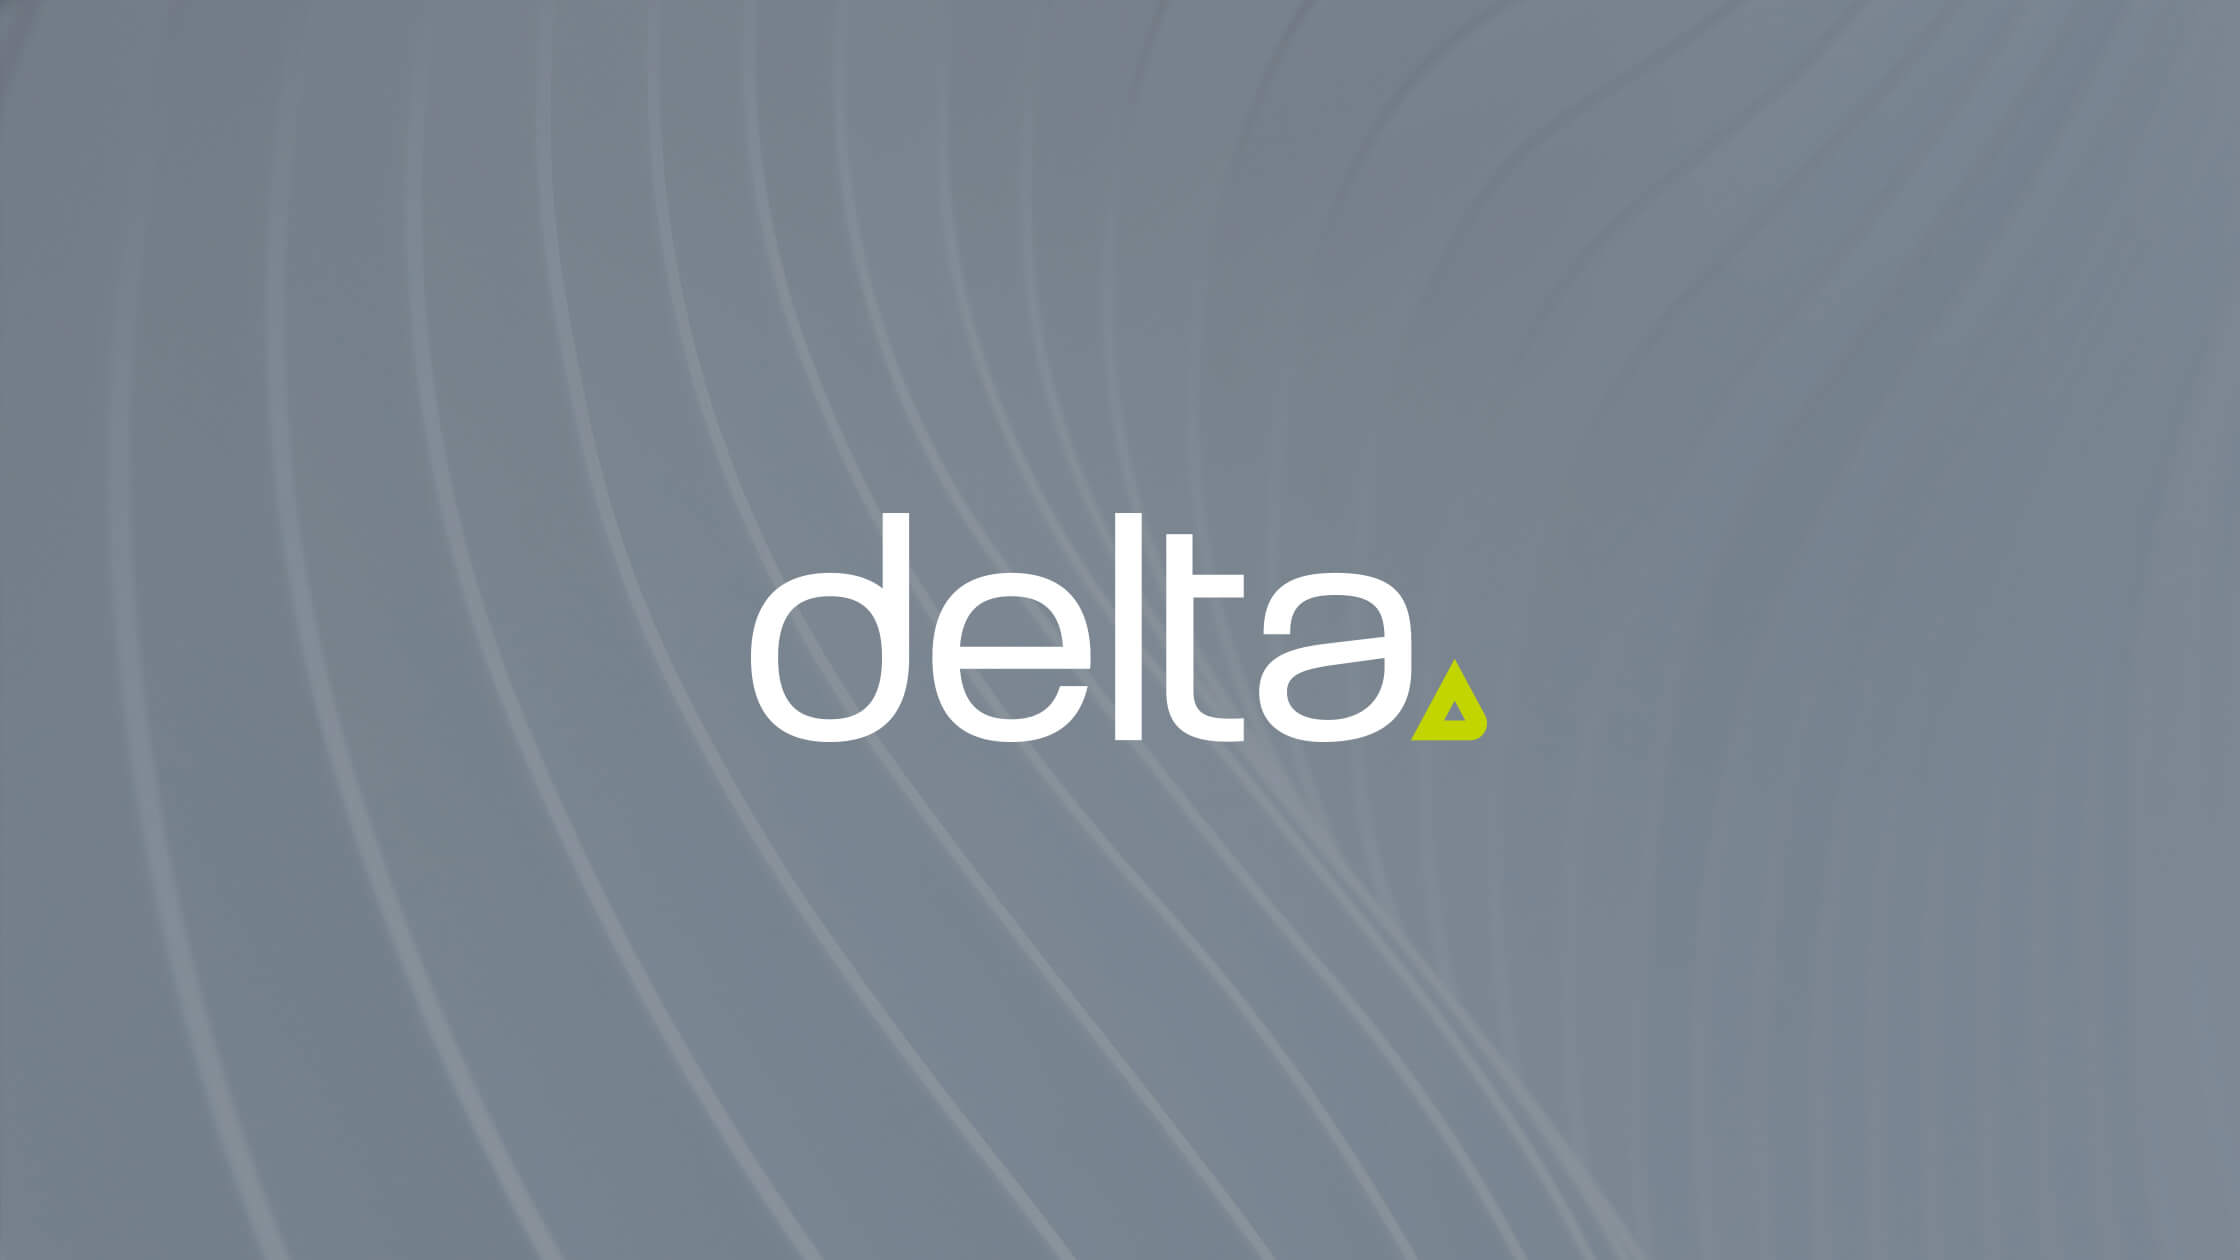 delta logo on an interesting background